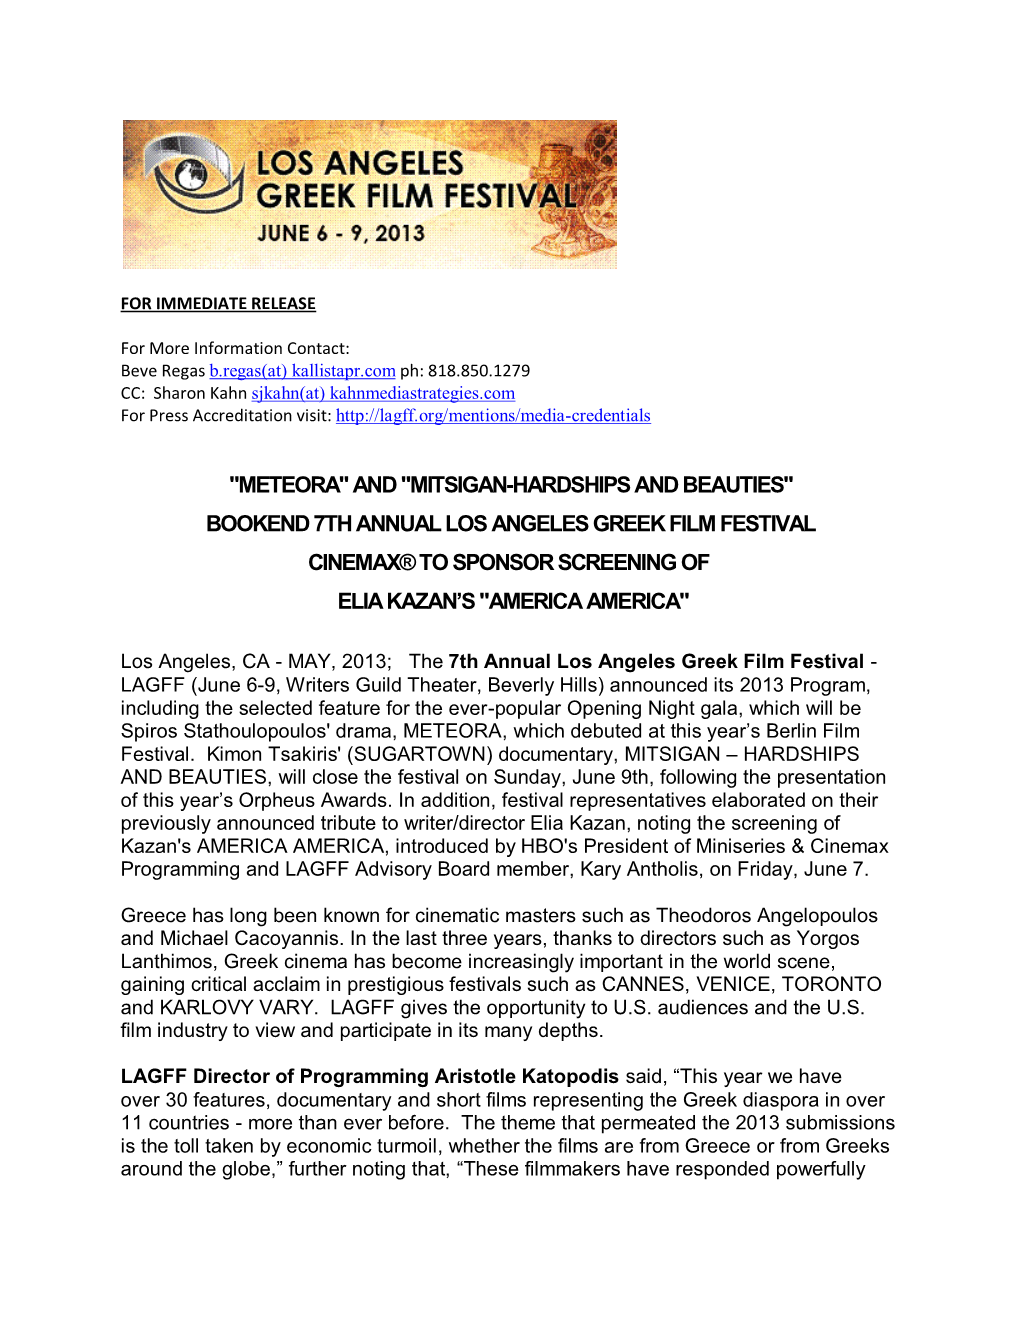 Bookend 7Th Annual Los Angeles Greek Film Festival Cinemax® to Sponsor Screening of Elia Kazan’S "America America"